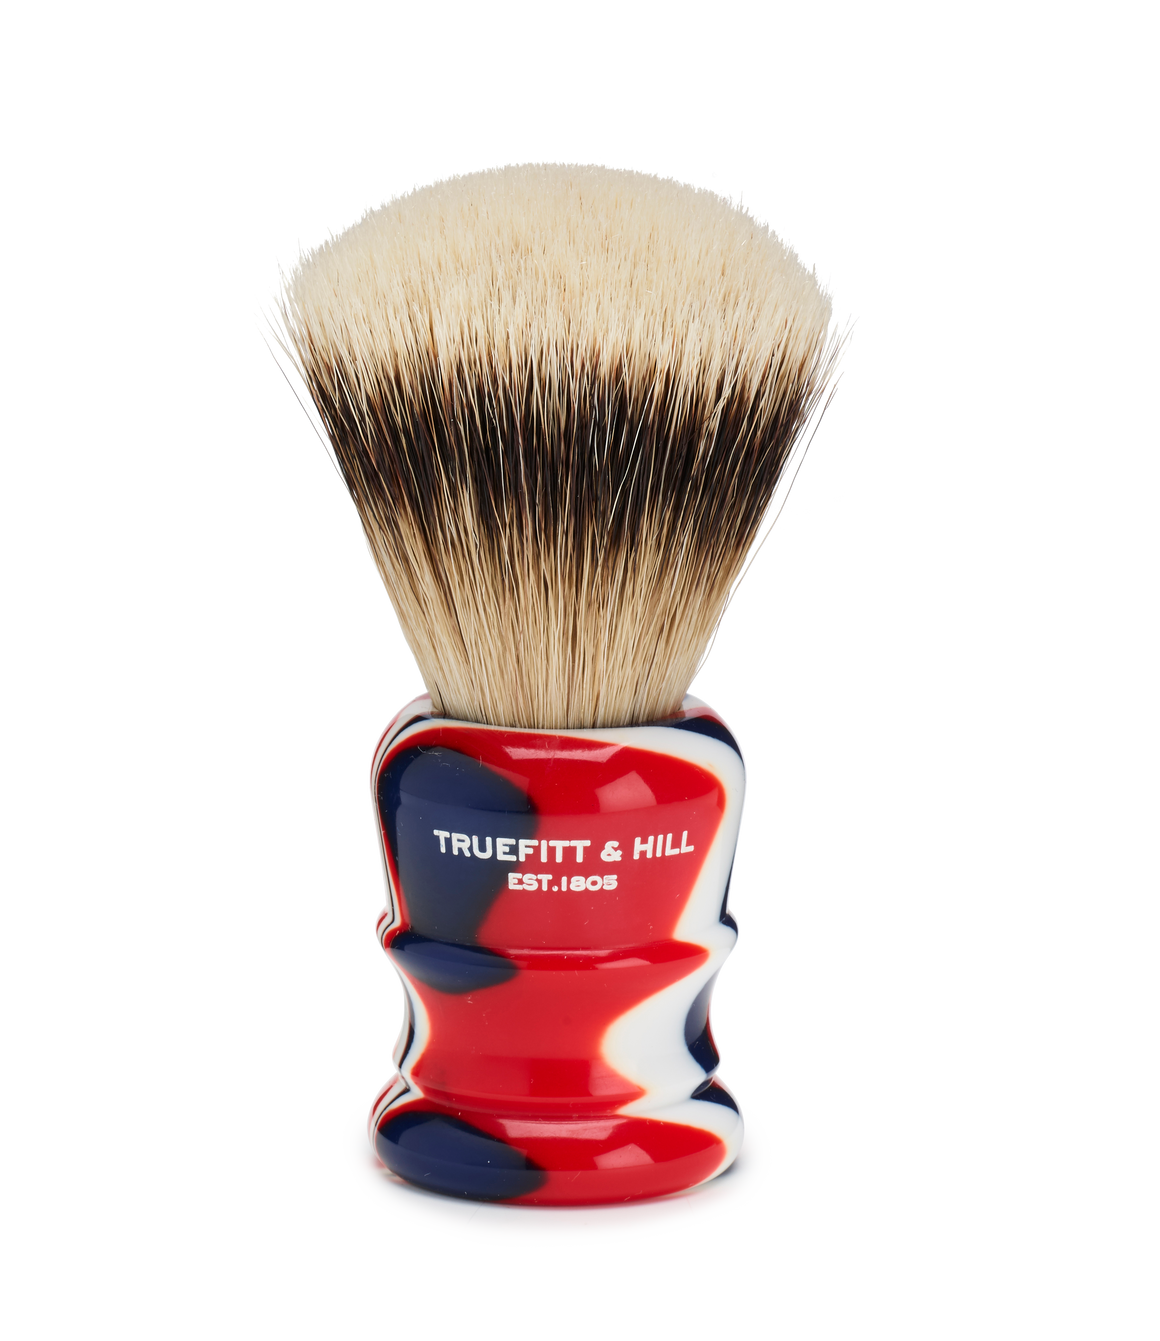 Wellington Silvertip Shaving Brush with a Fan Knot